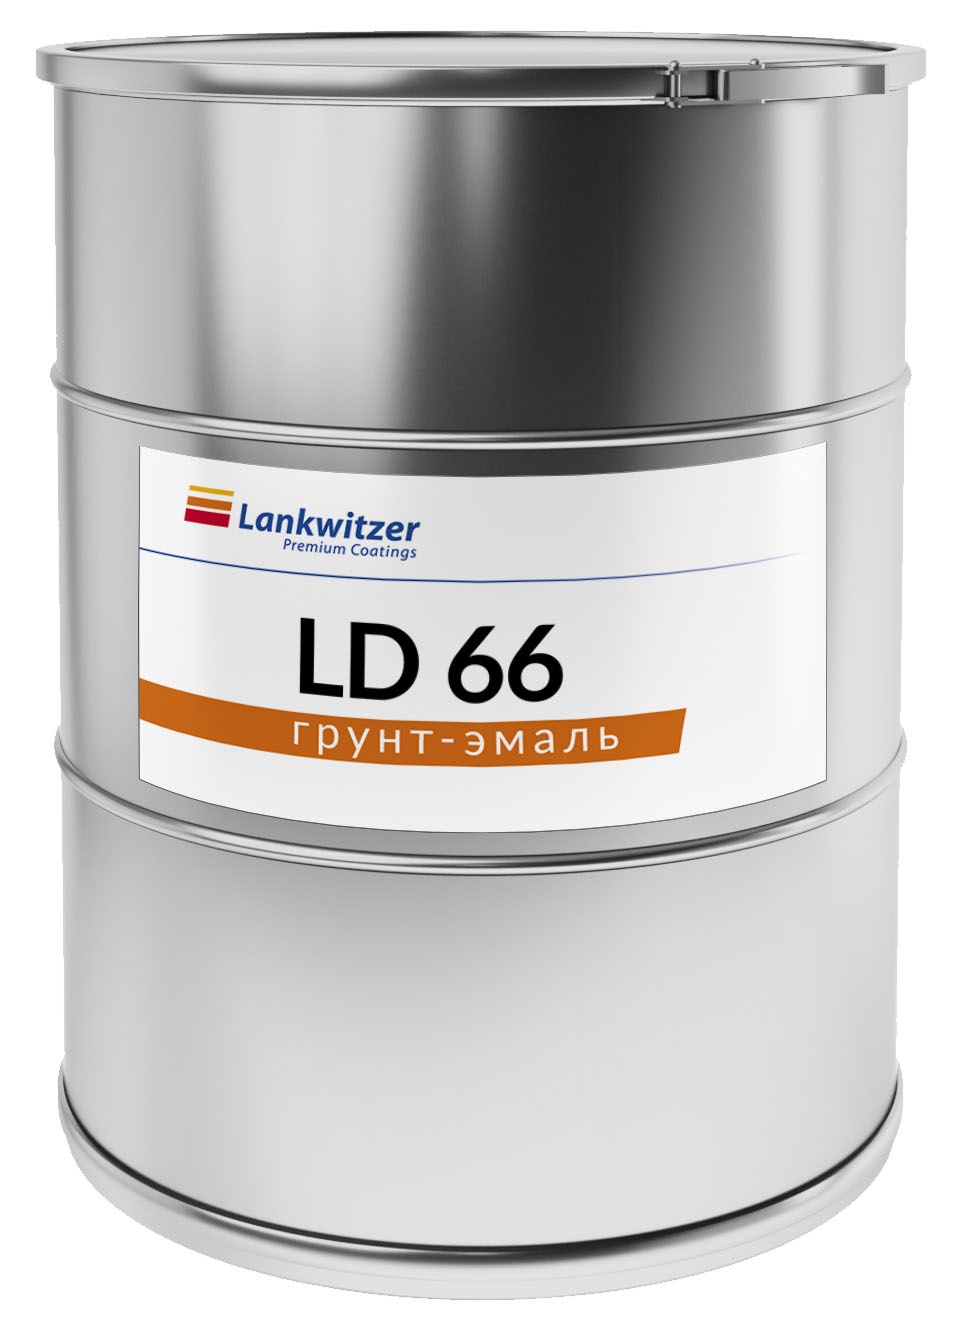 LD 66 грунт-эмаль